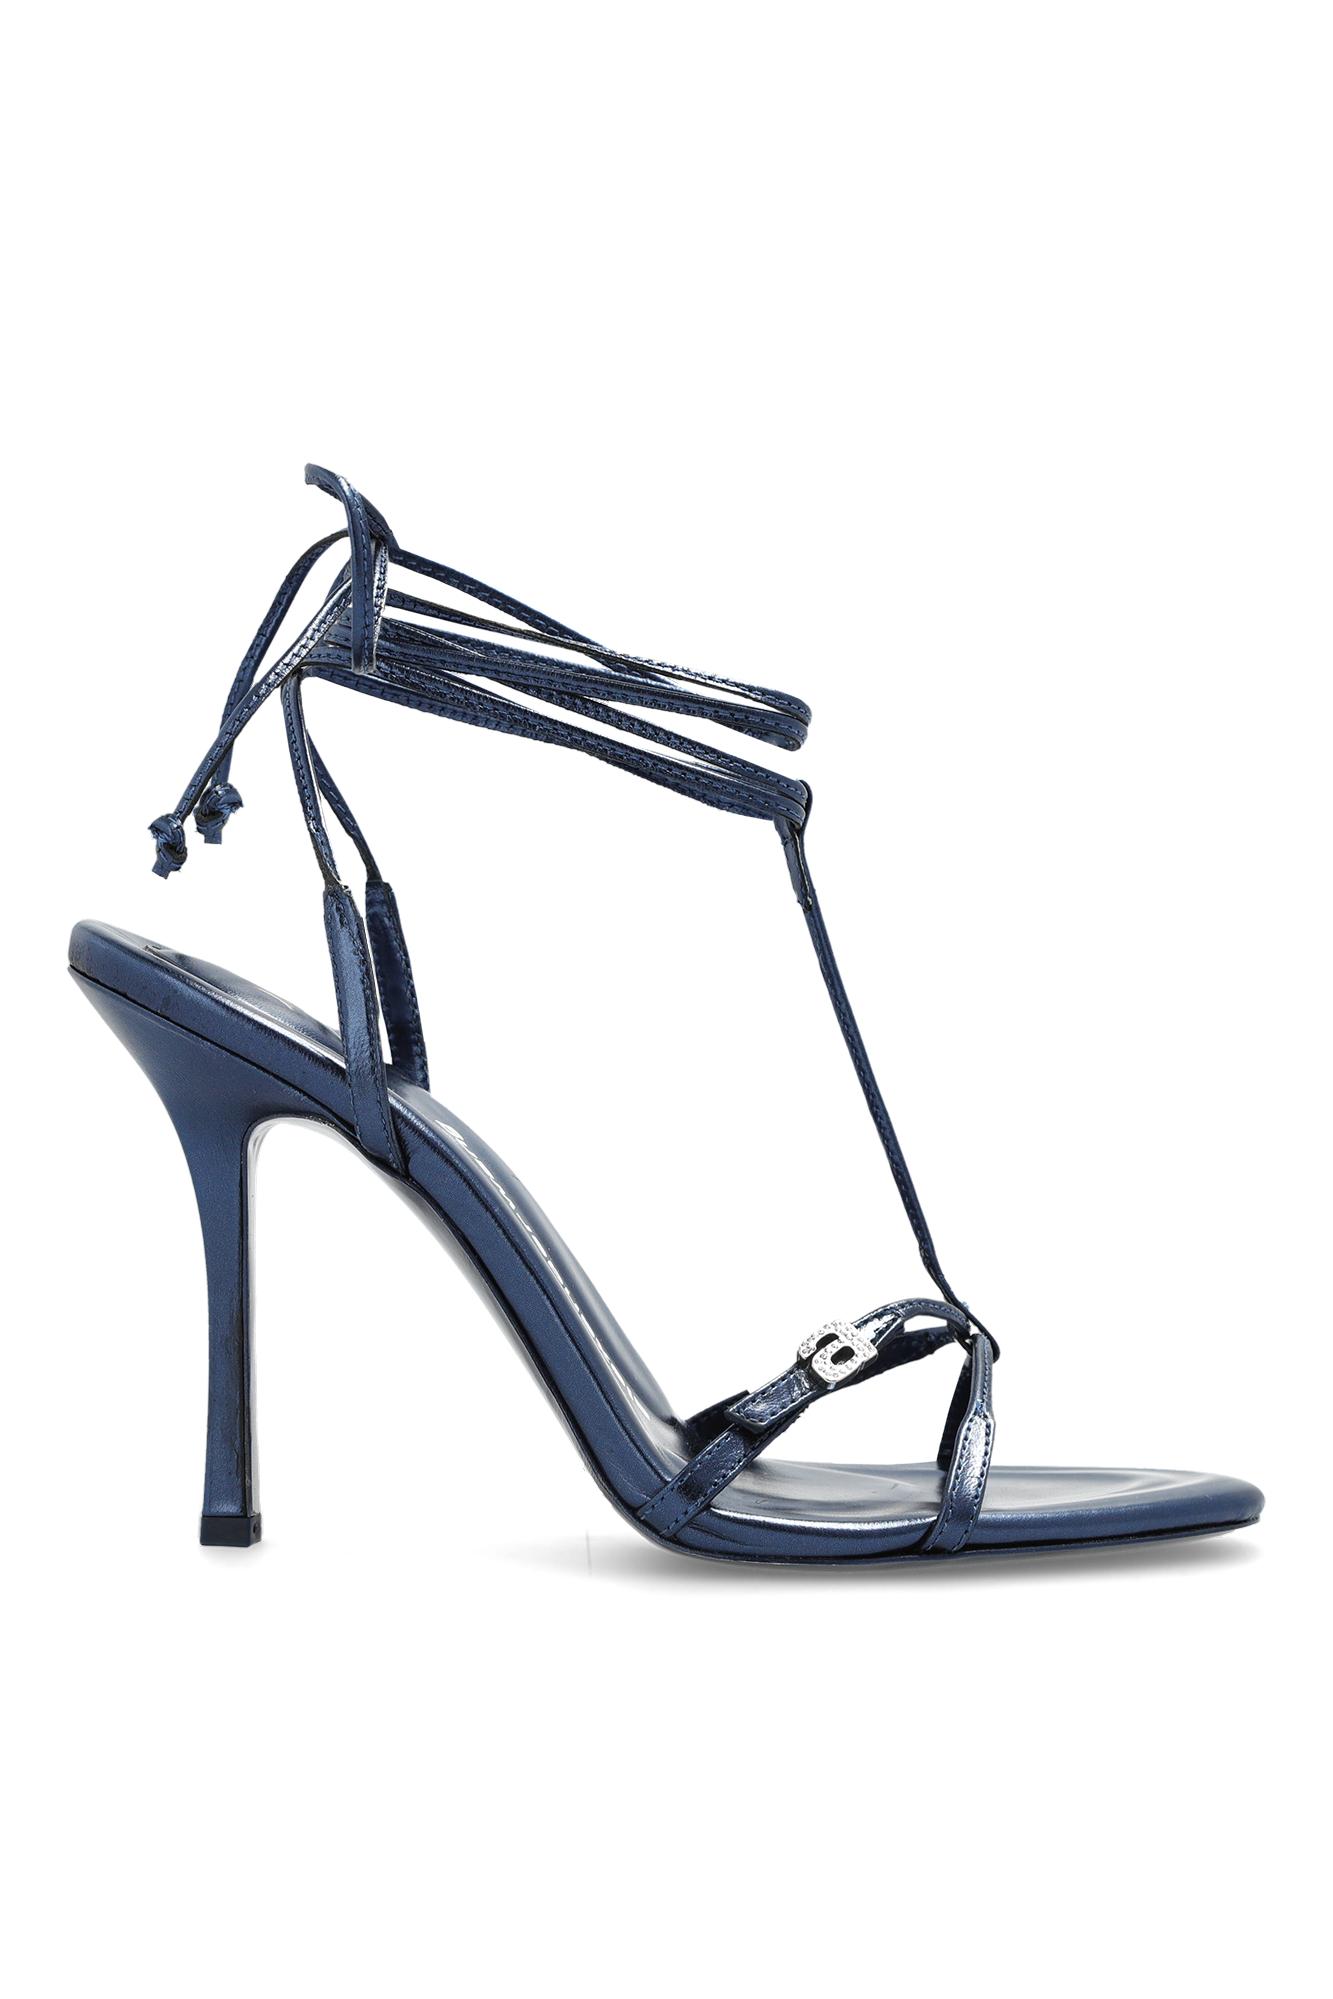 Alexander Wang 'lucienne' Heeled Sandals in Blue | Lyst